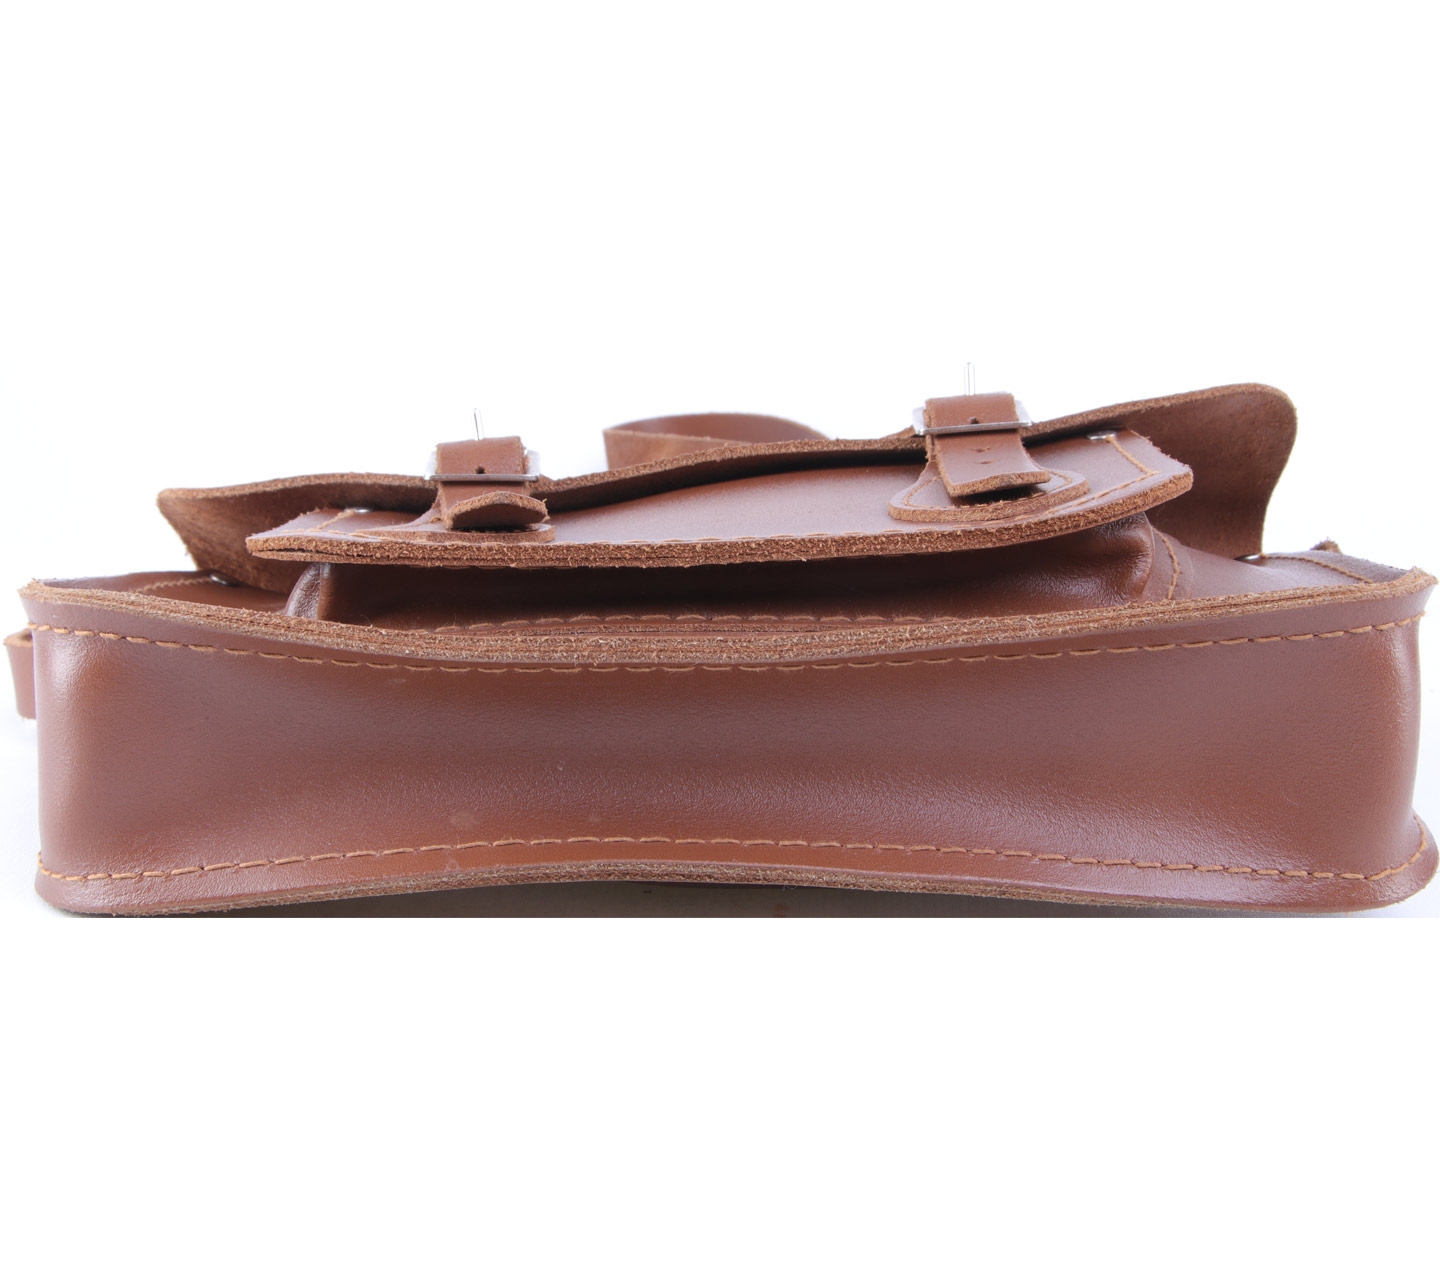 The Cambridge Satchel Company Brown Sling Bag